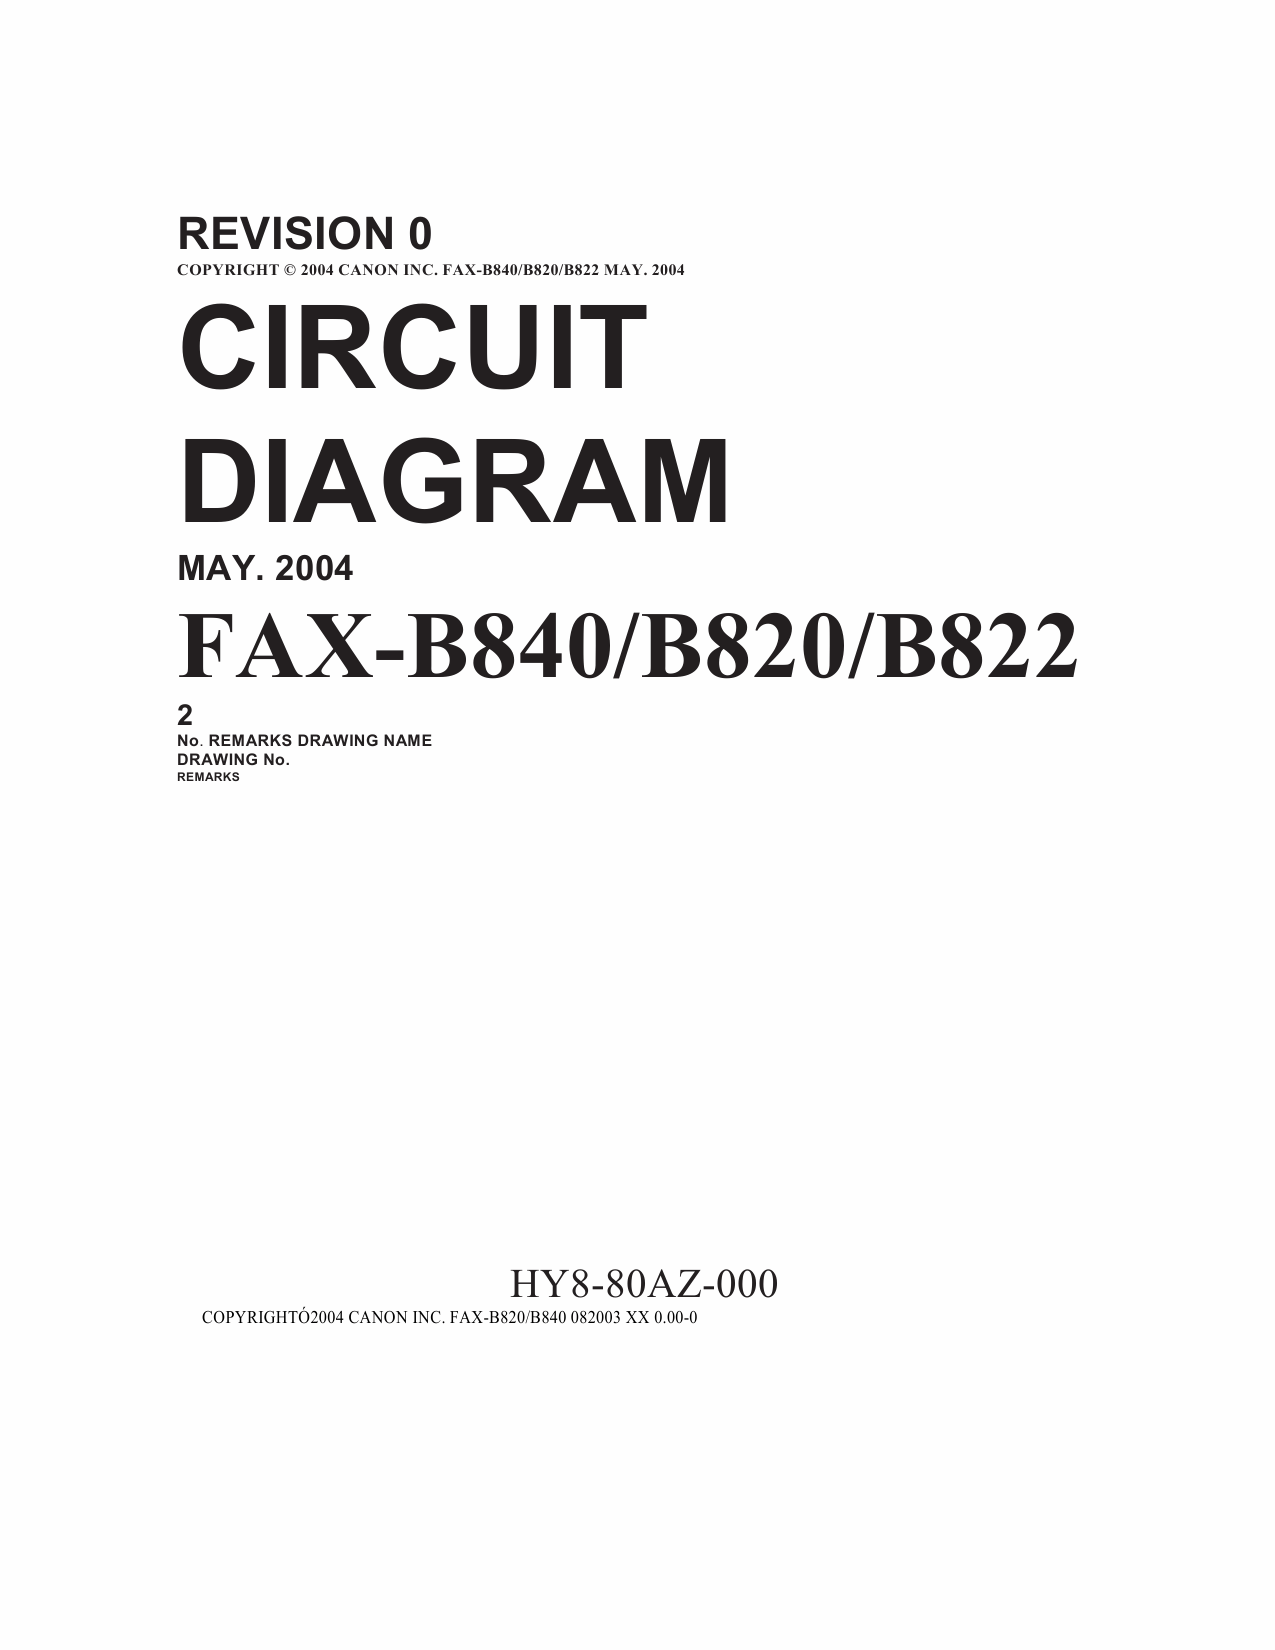 Canon FAX B820 B822 B840 Circuit Diagram-1